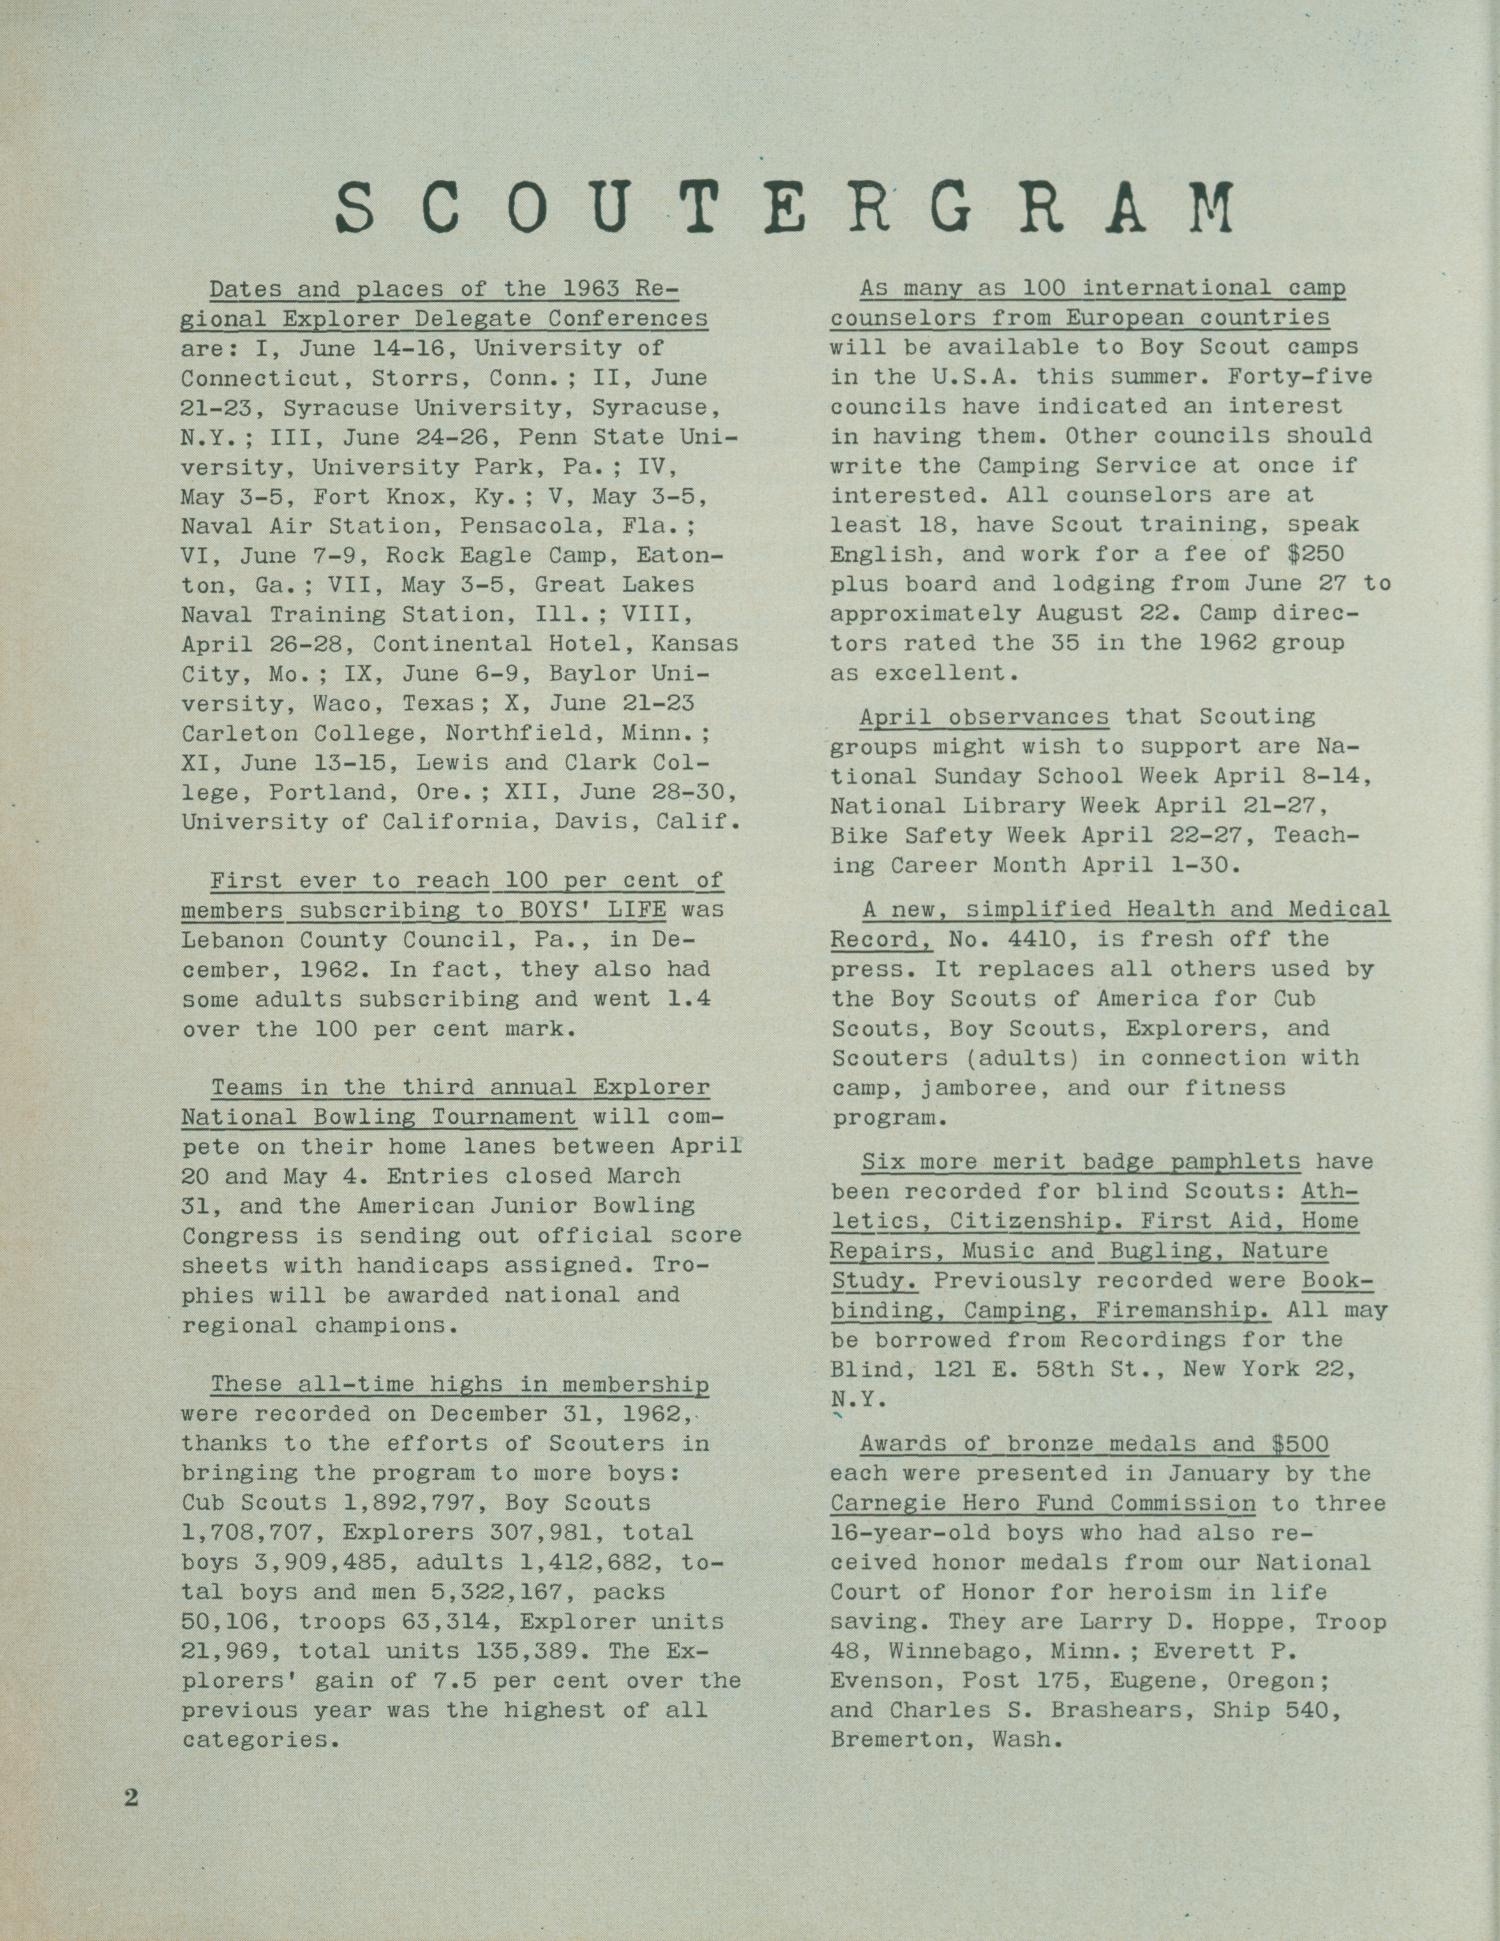 Scouting, Volume 51, Number 4, April 1963
                                                
                                                    2
                                                